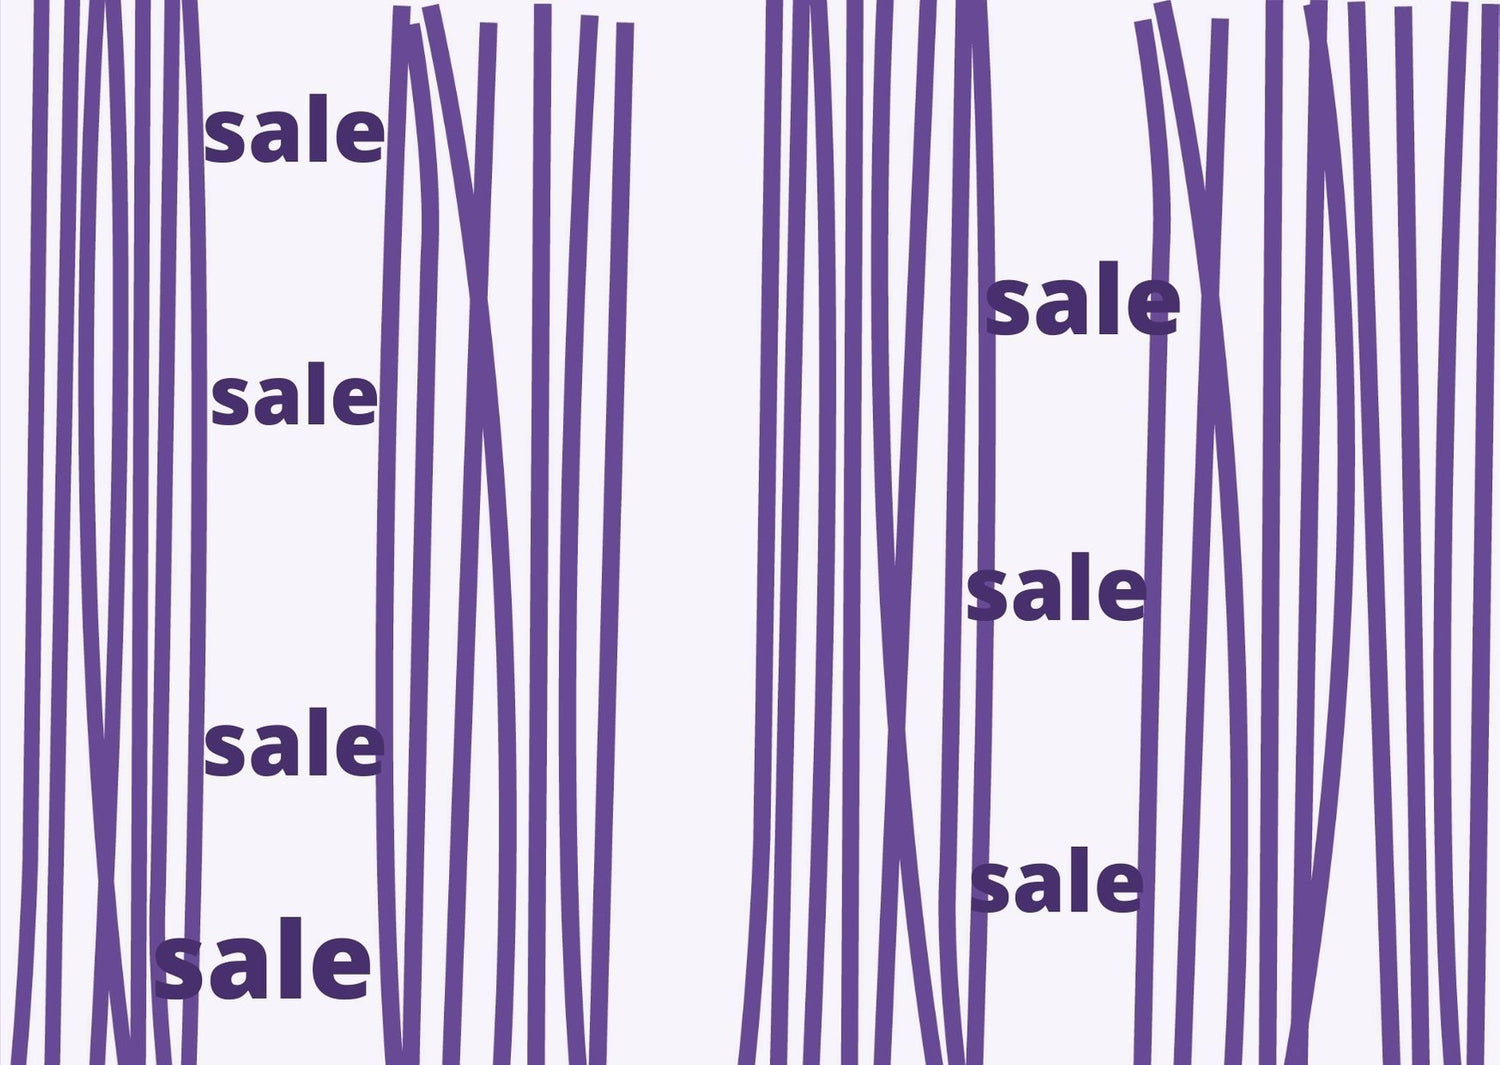 A purple twig-shaped pattern with words 'sale' in purple on light purple background.